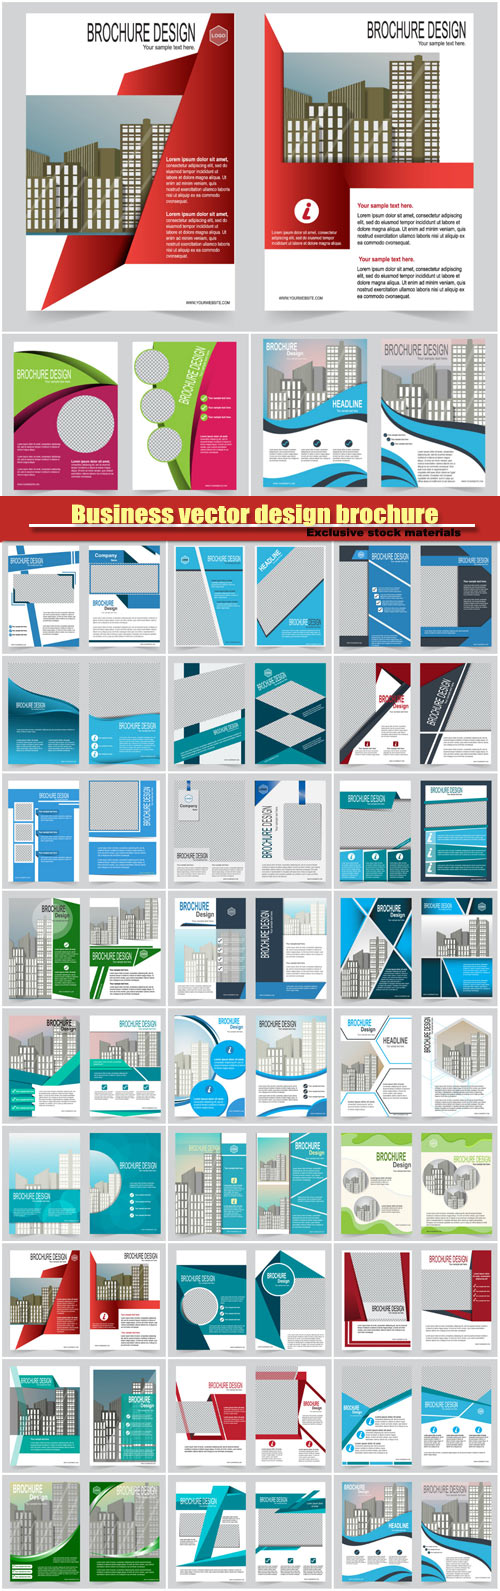 Business vector design brochure, flyer creative template